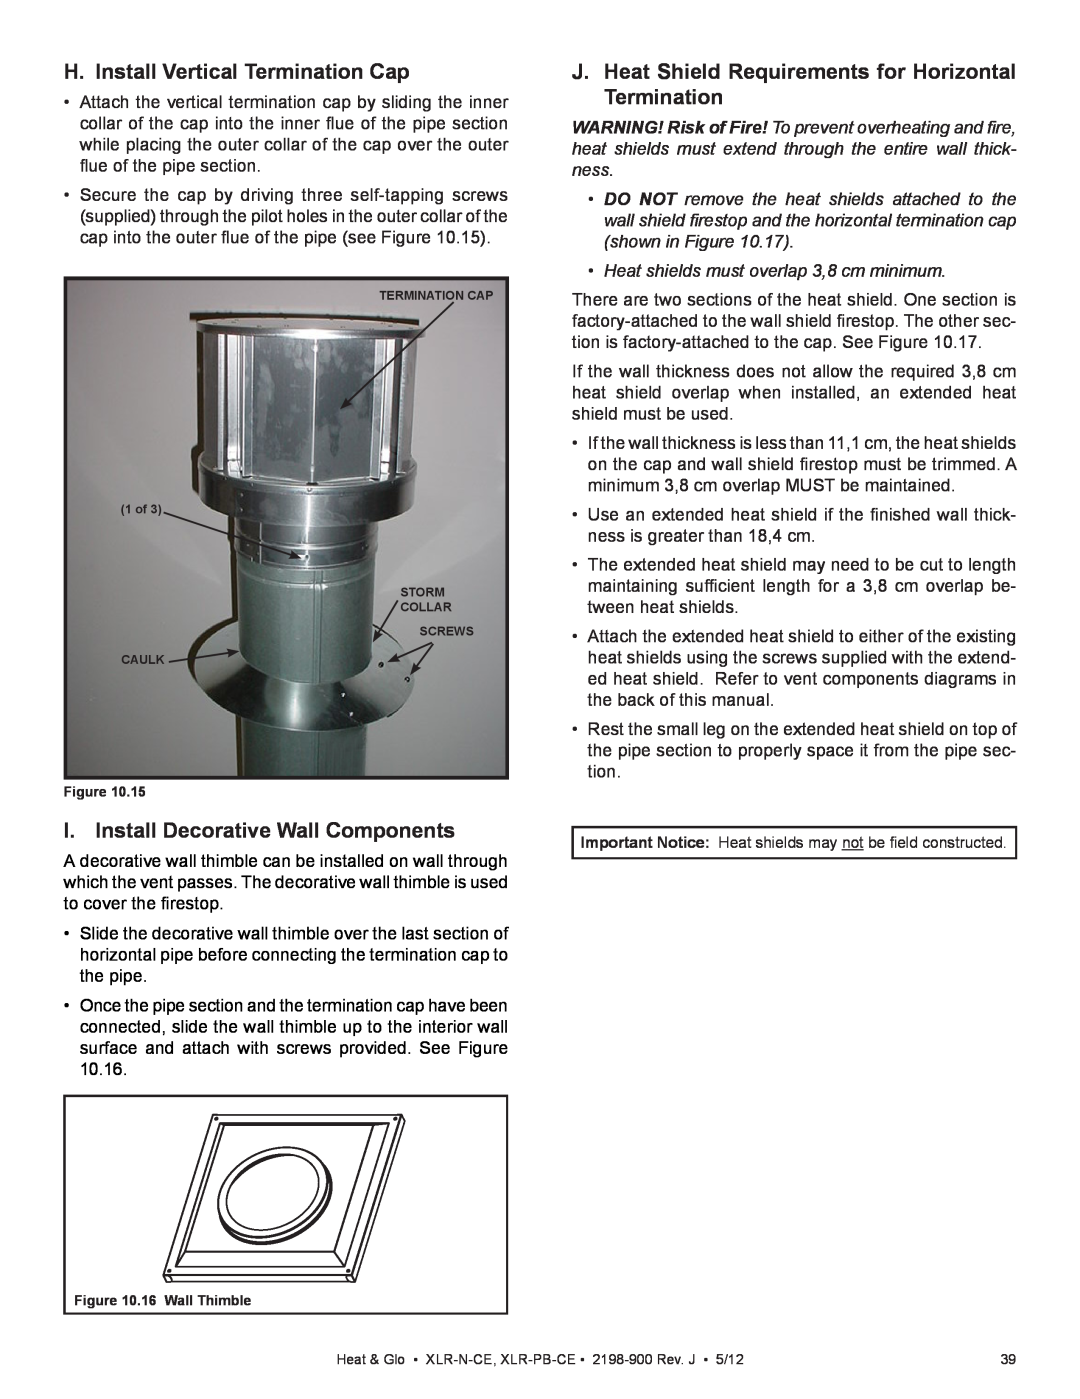 Heat & Glo LifeStyle XLR-PB-CE, XLR-N-CE manual H. Install Vertical Termination Cap, I. Install Decorative Wall Components 